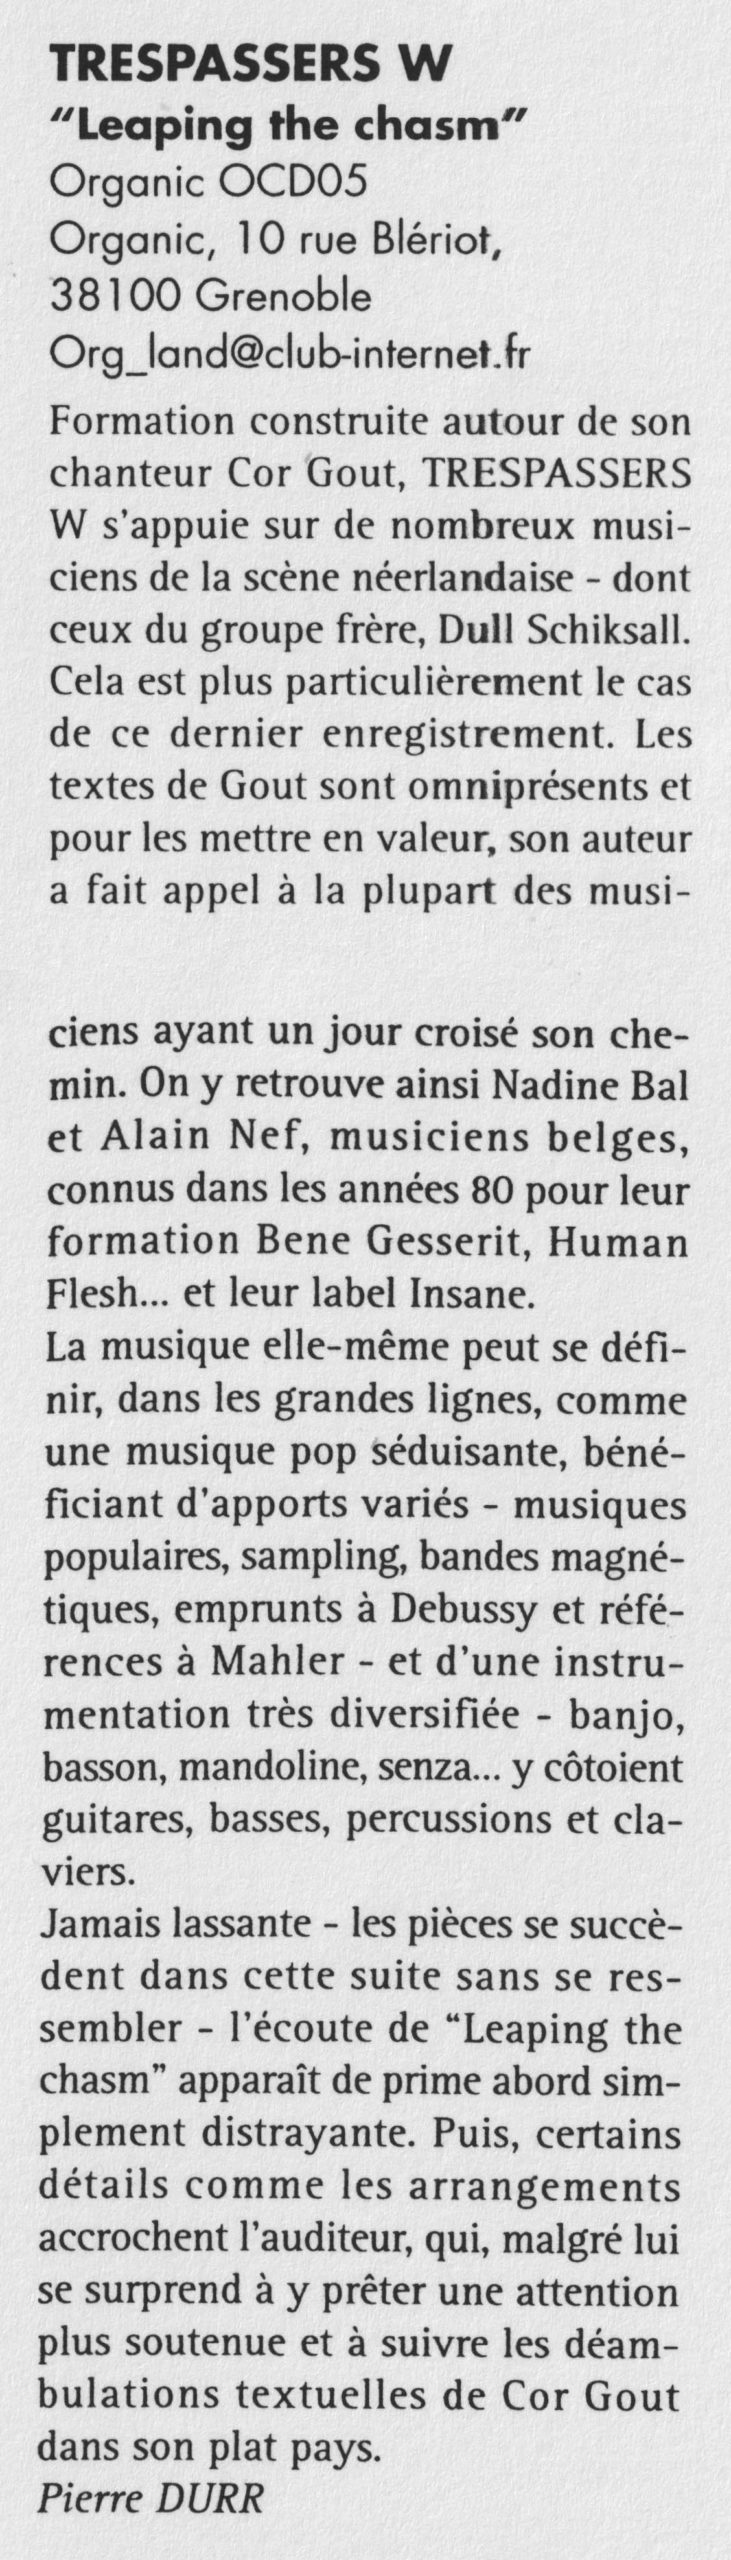 Pierre Durr, Revue&Corrigée, # 43, maart 2000